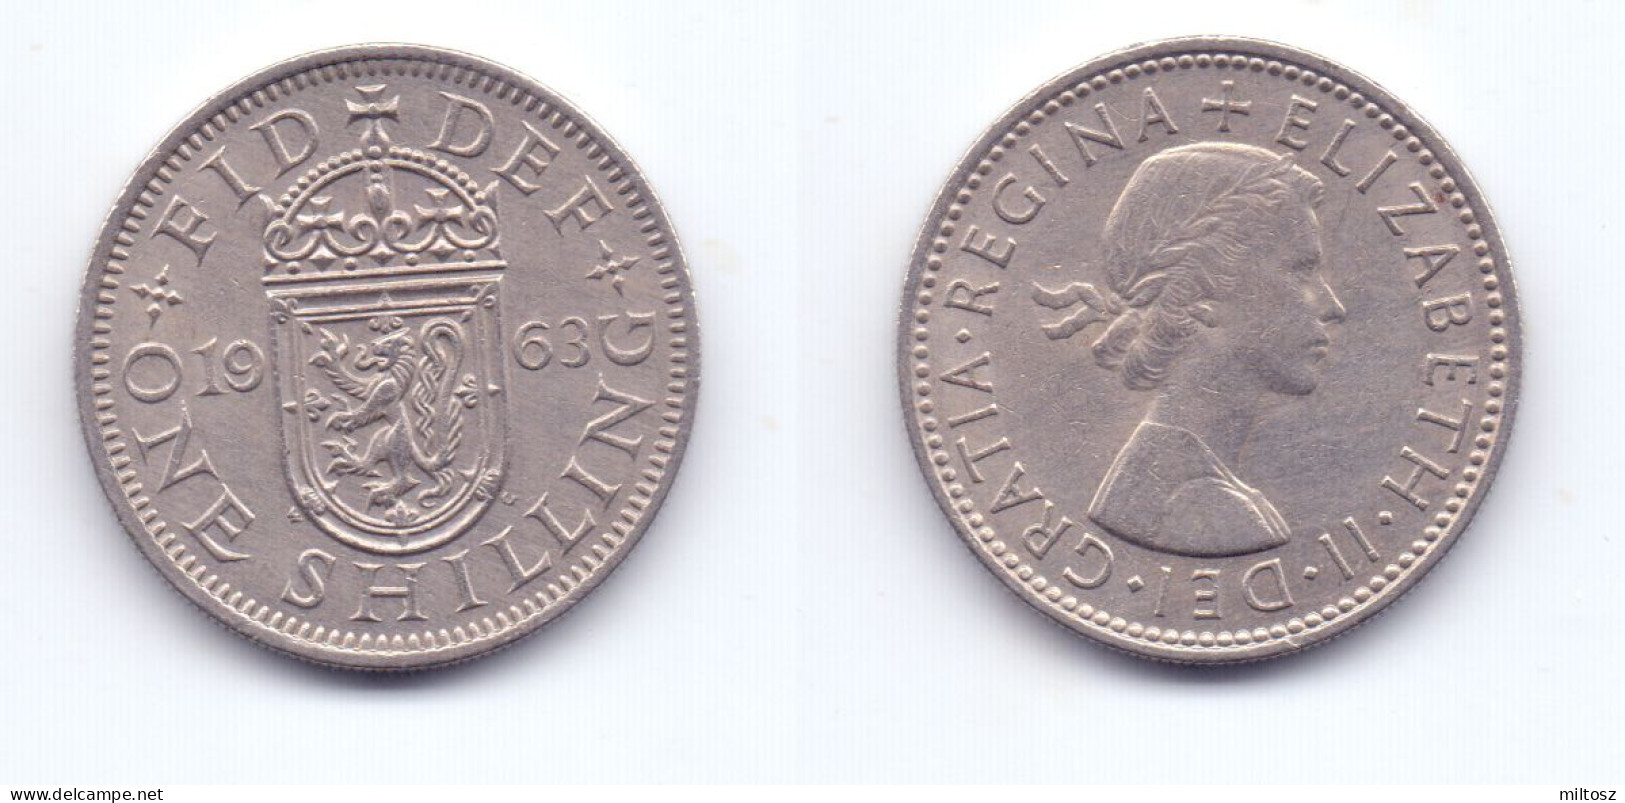 Great Britain 1 Shilling 1963 Scottish Crest - I. 1 Shilling